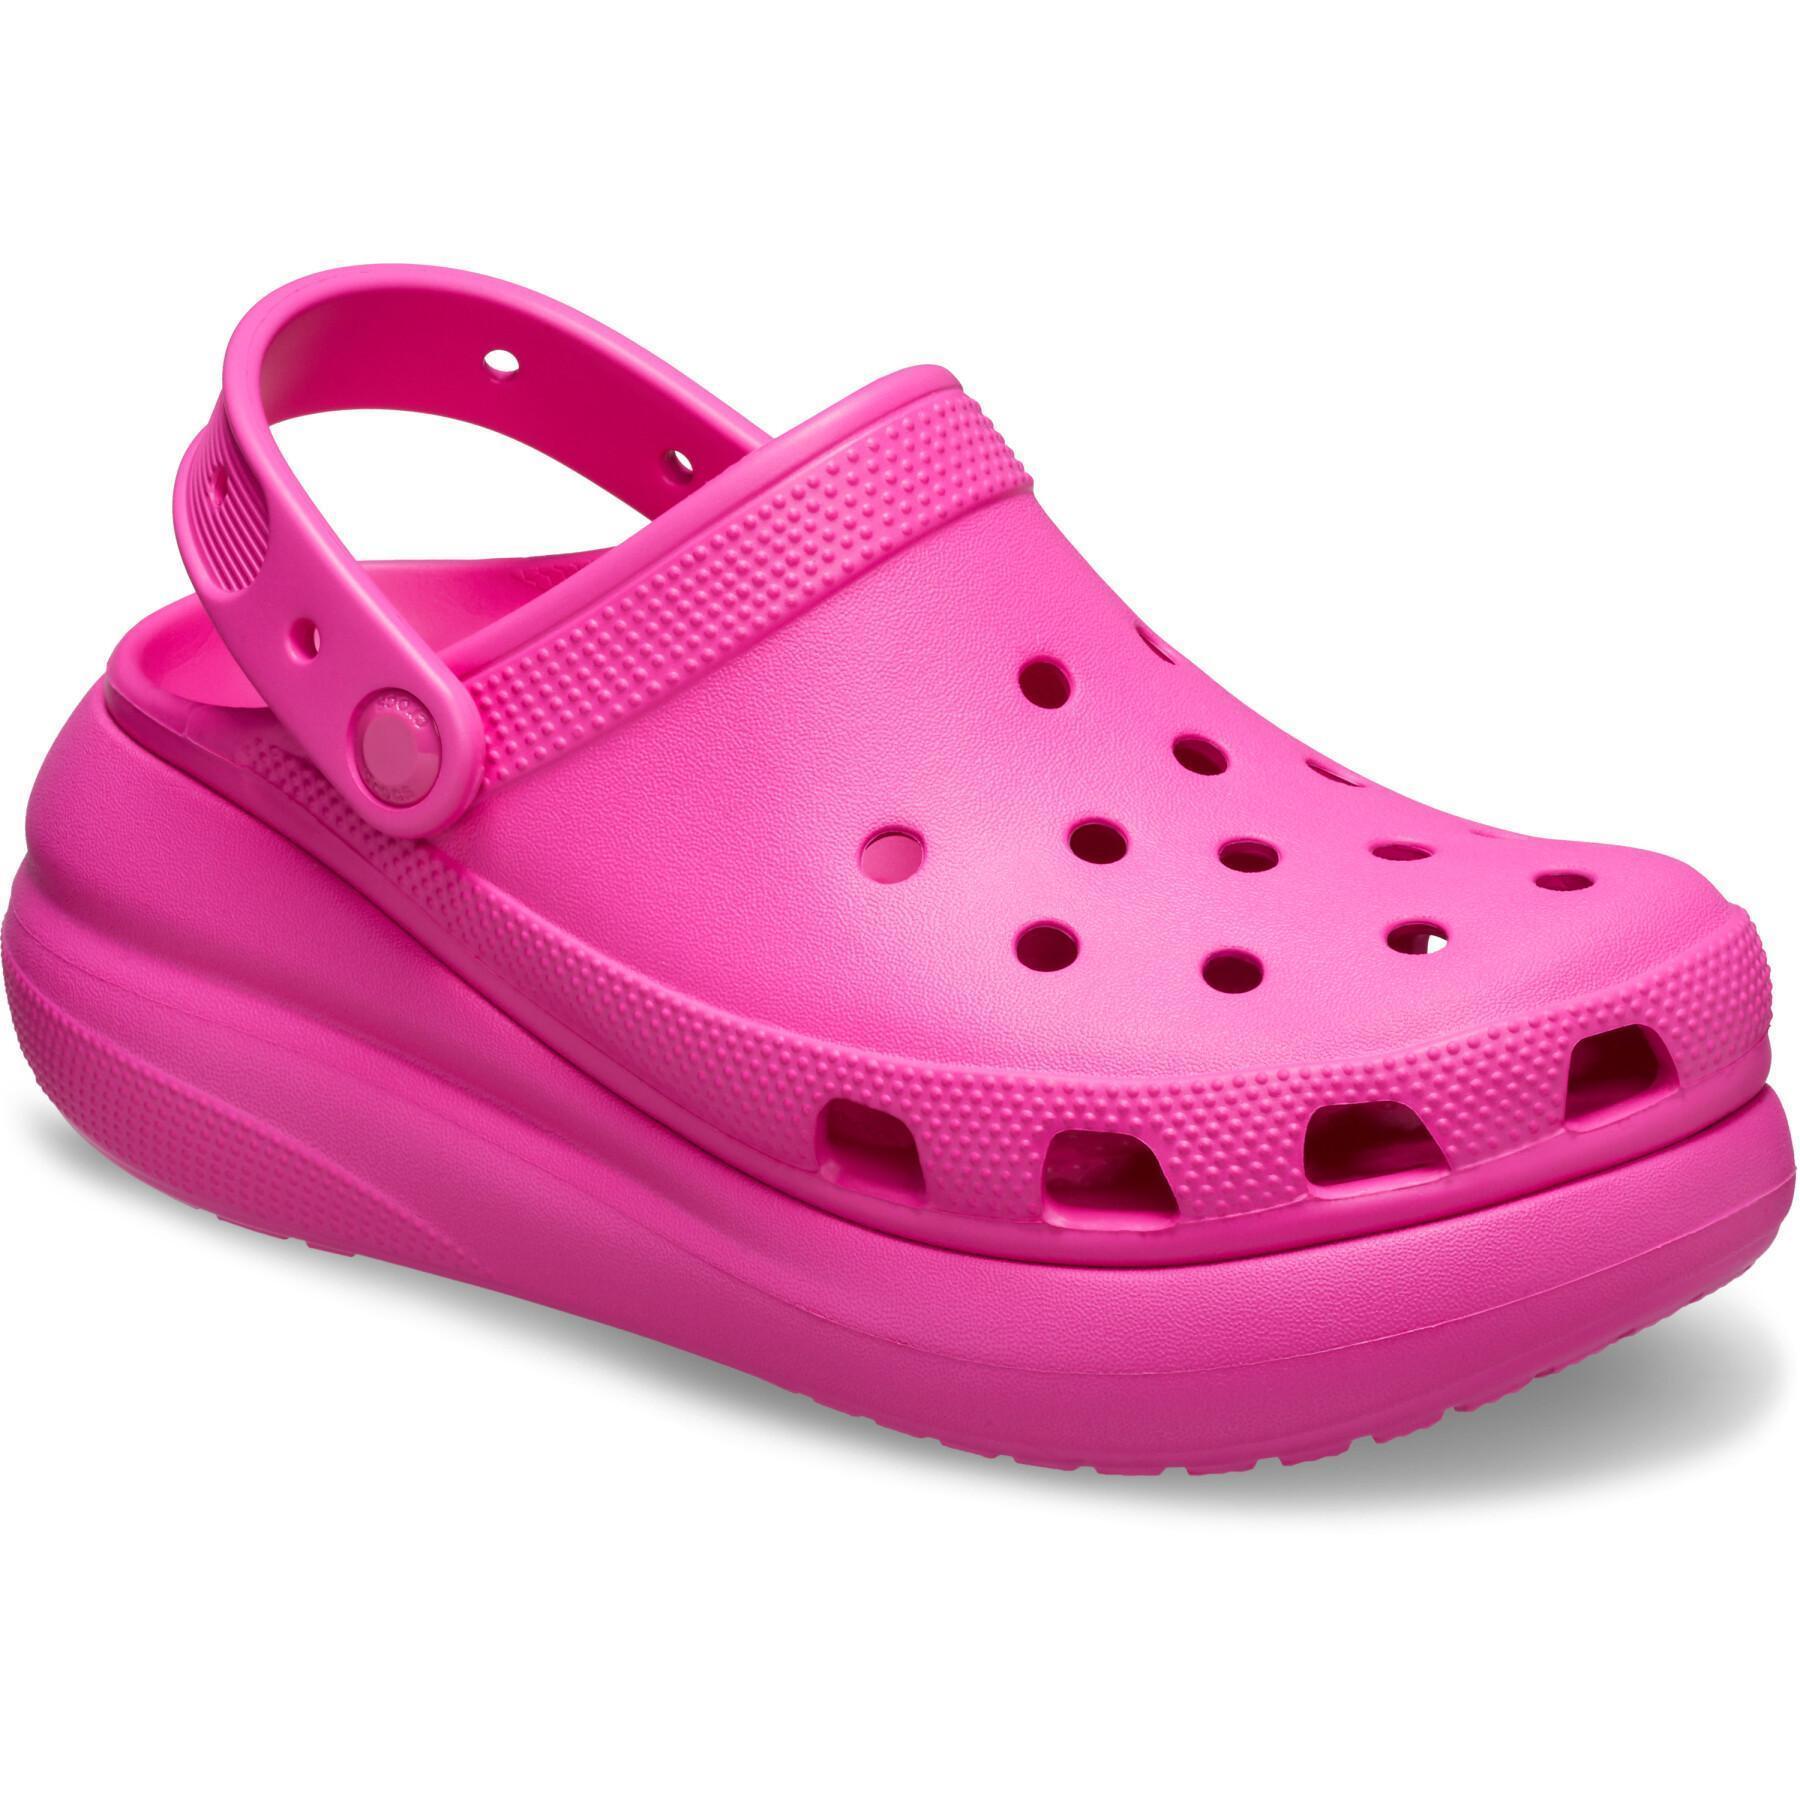 Children's clogs Crocs Crush